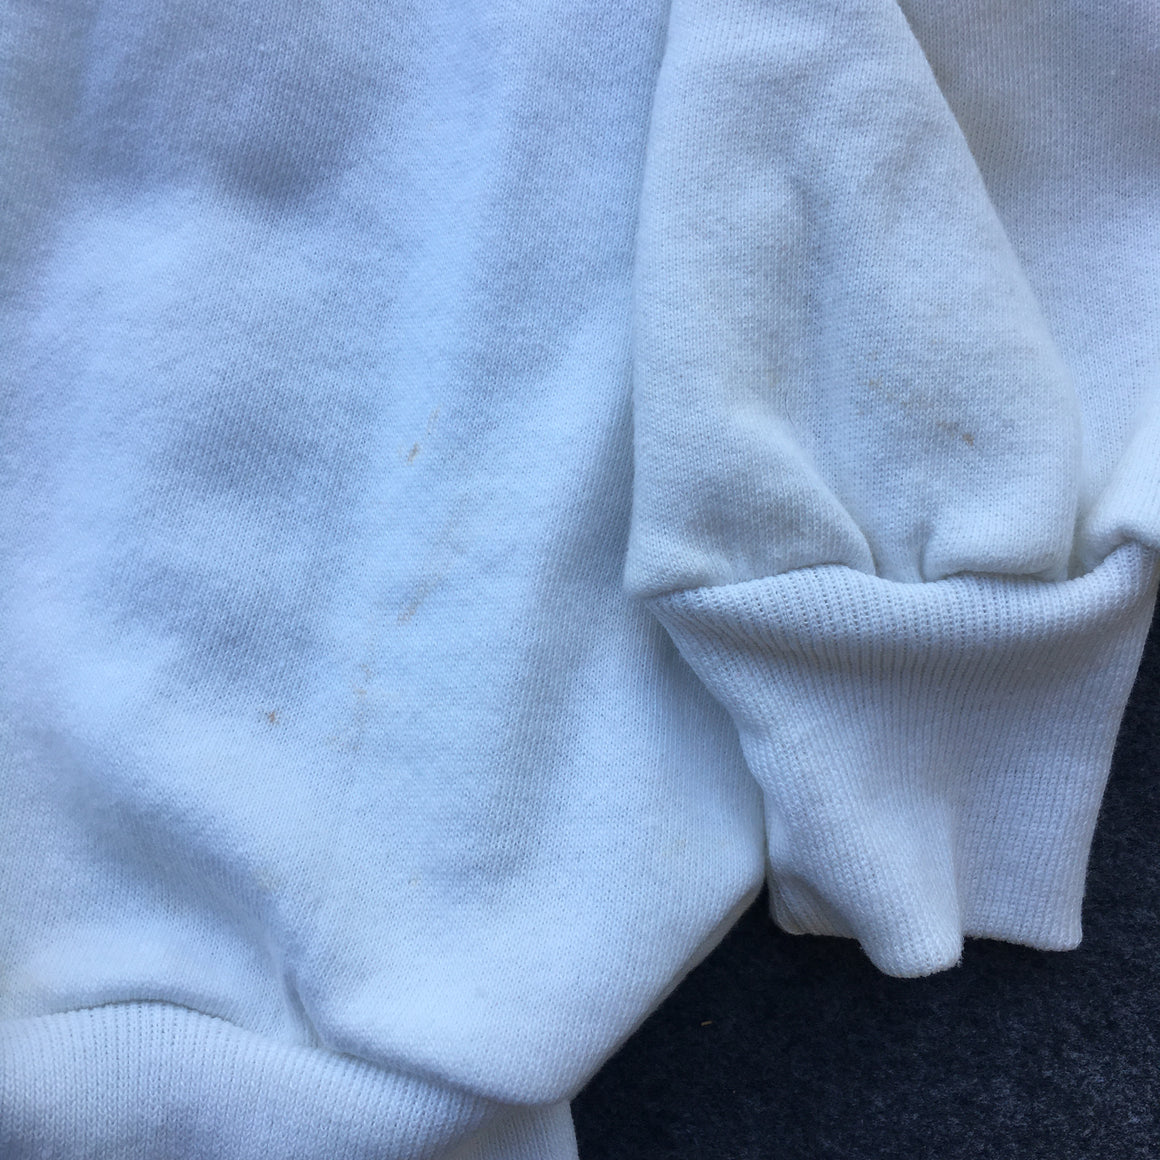 Hershey Impact soccer sweatshirt -- XL / 2XL